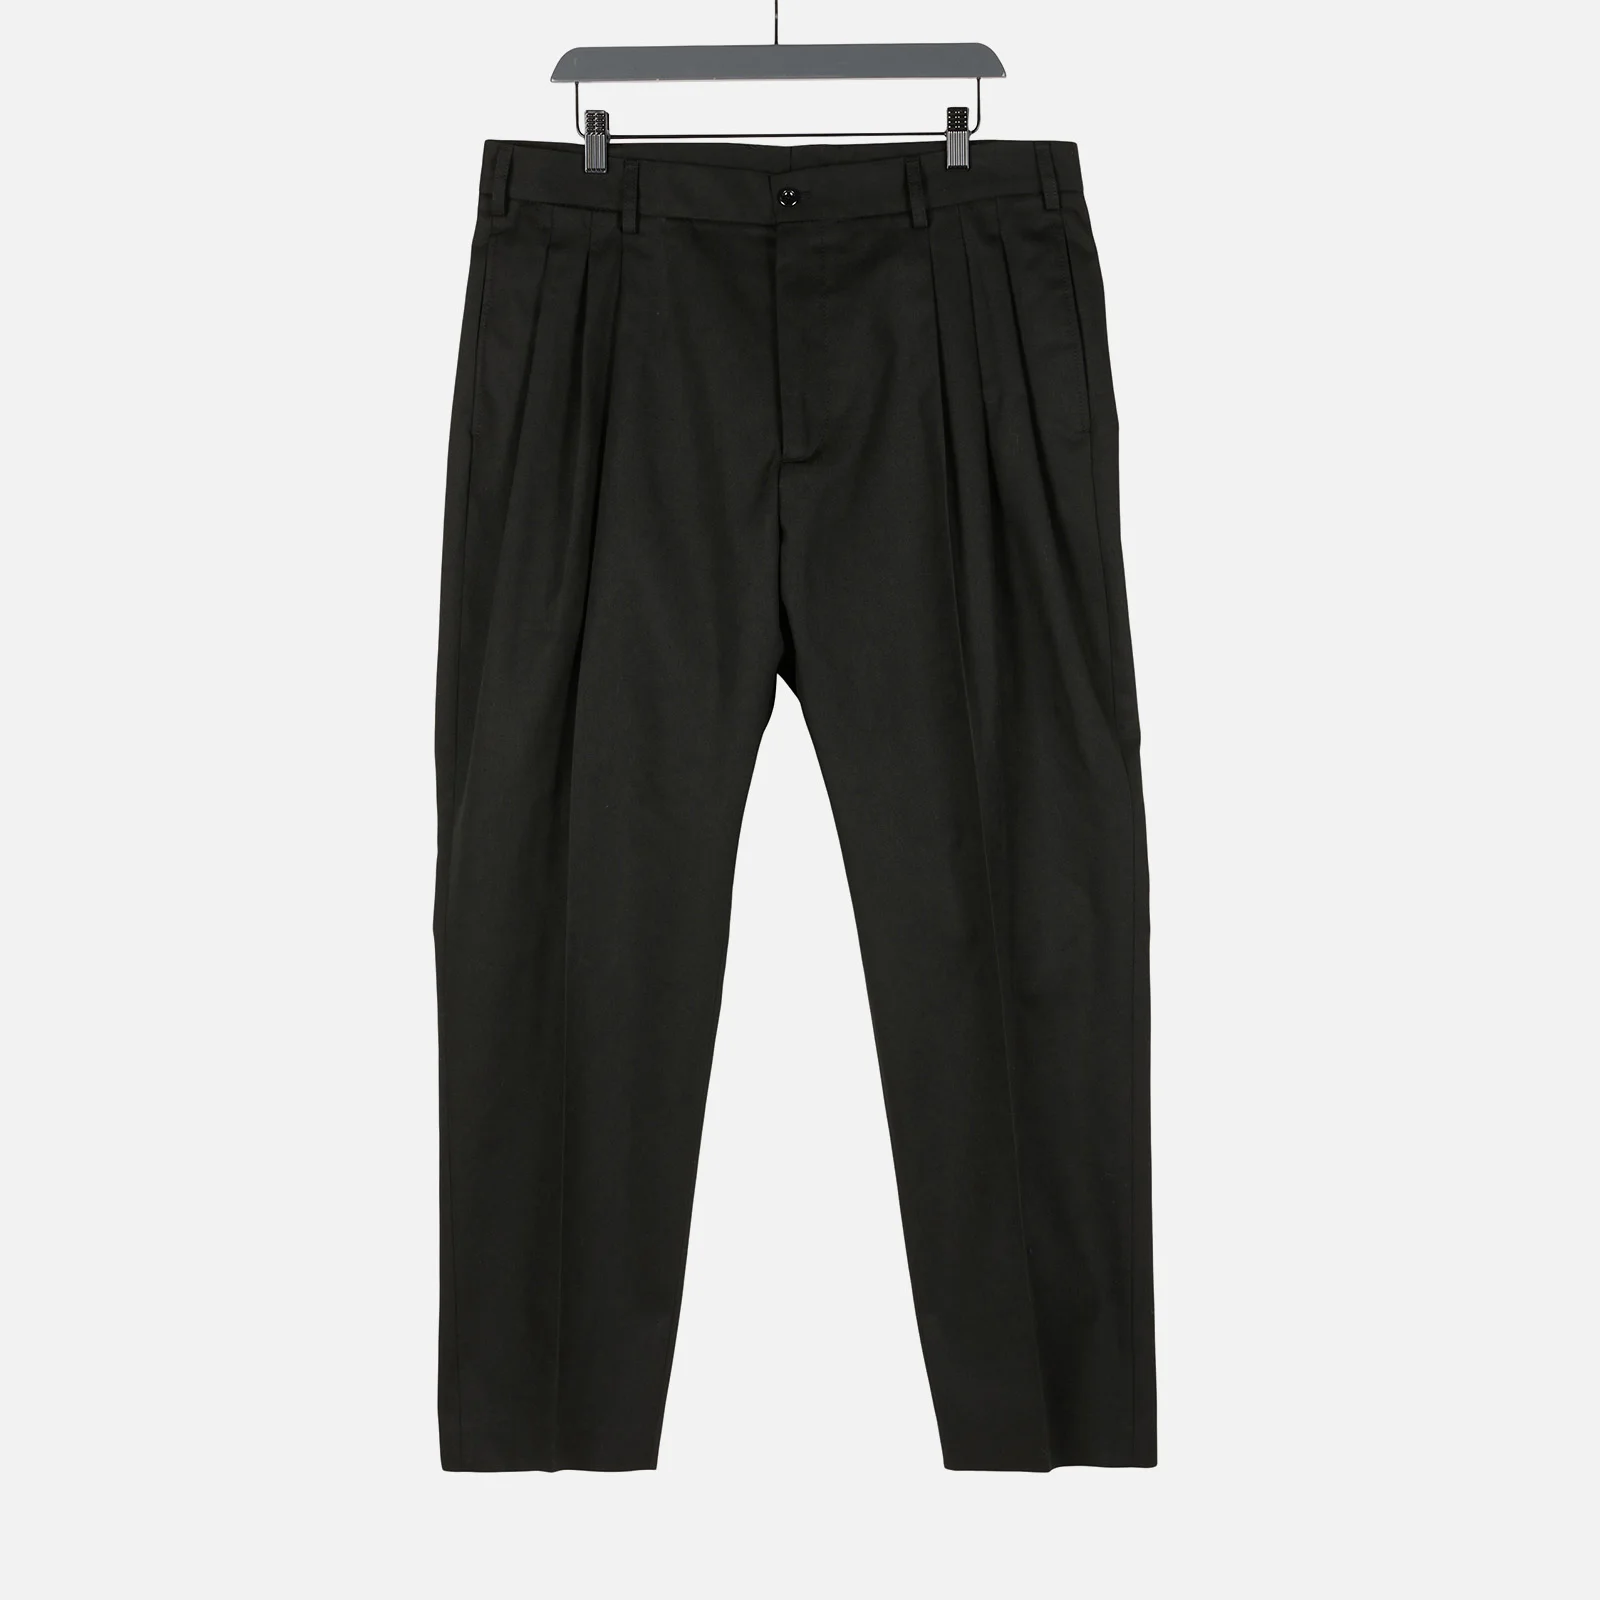 4SDesigns Men's Triple Pleat Pants - Black Image 1